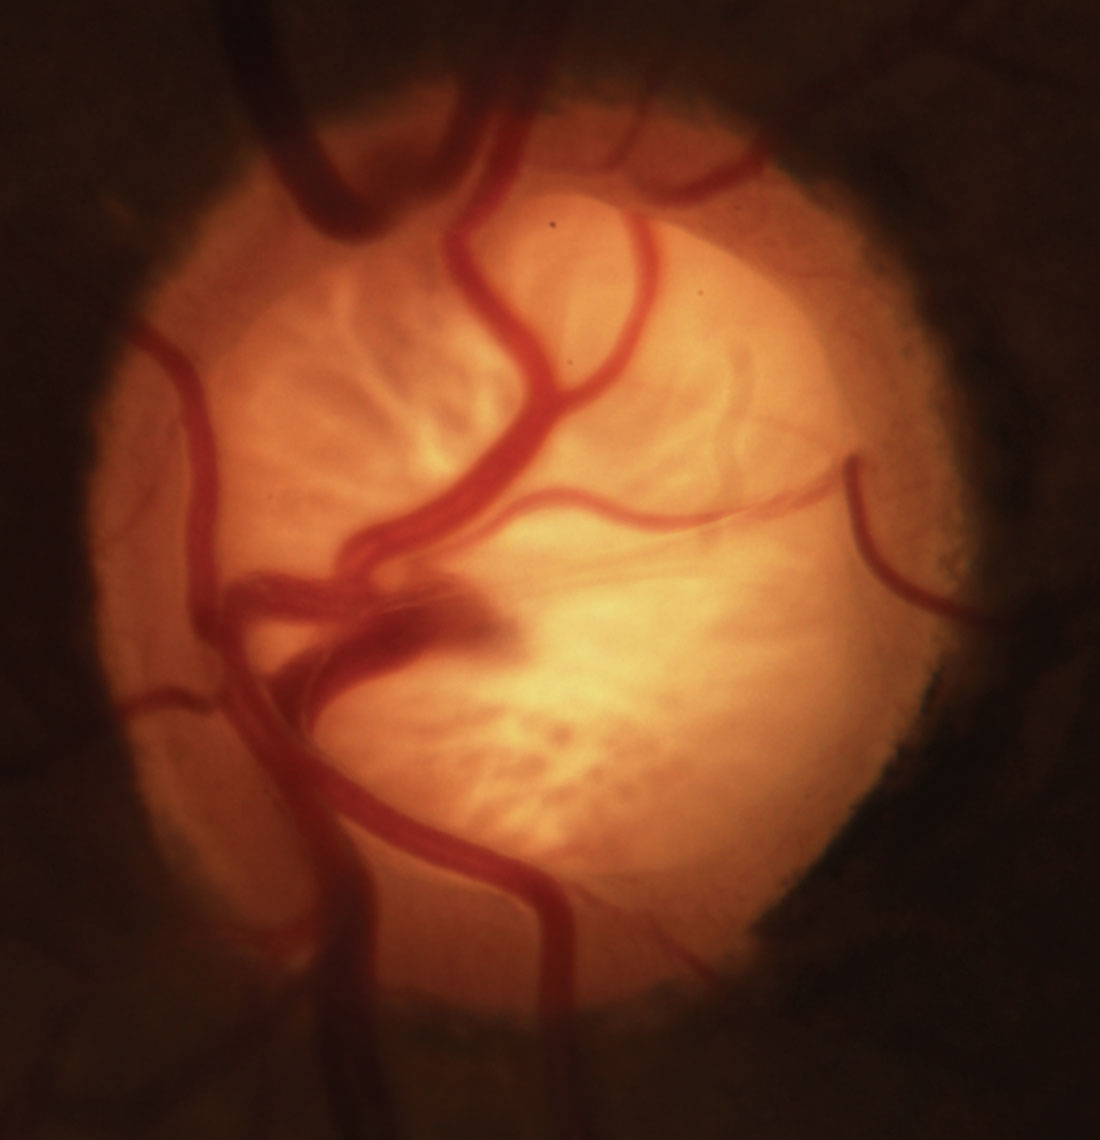 High blood pressure increases risk of open-angle glaucoma. Photo: Michael Dorkowski, OD.